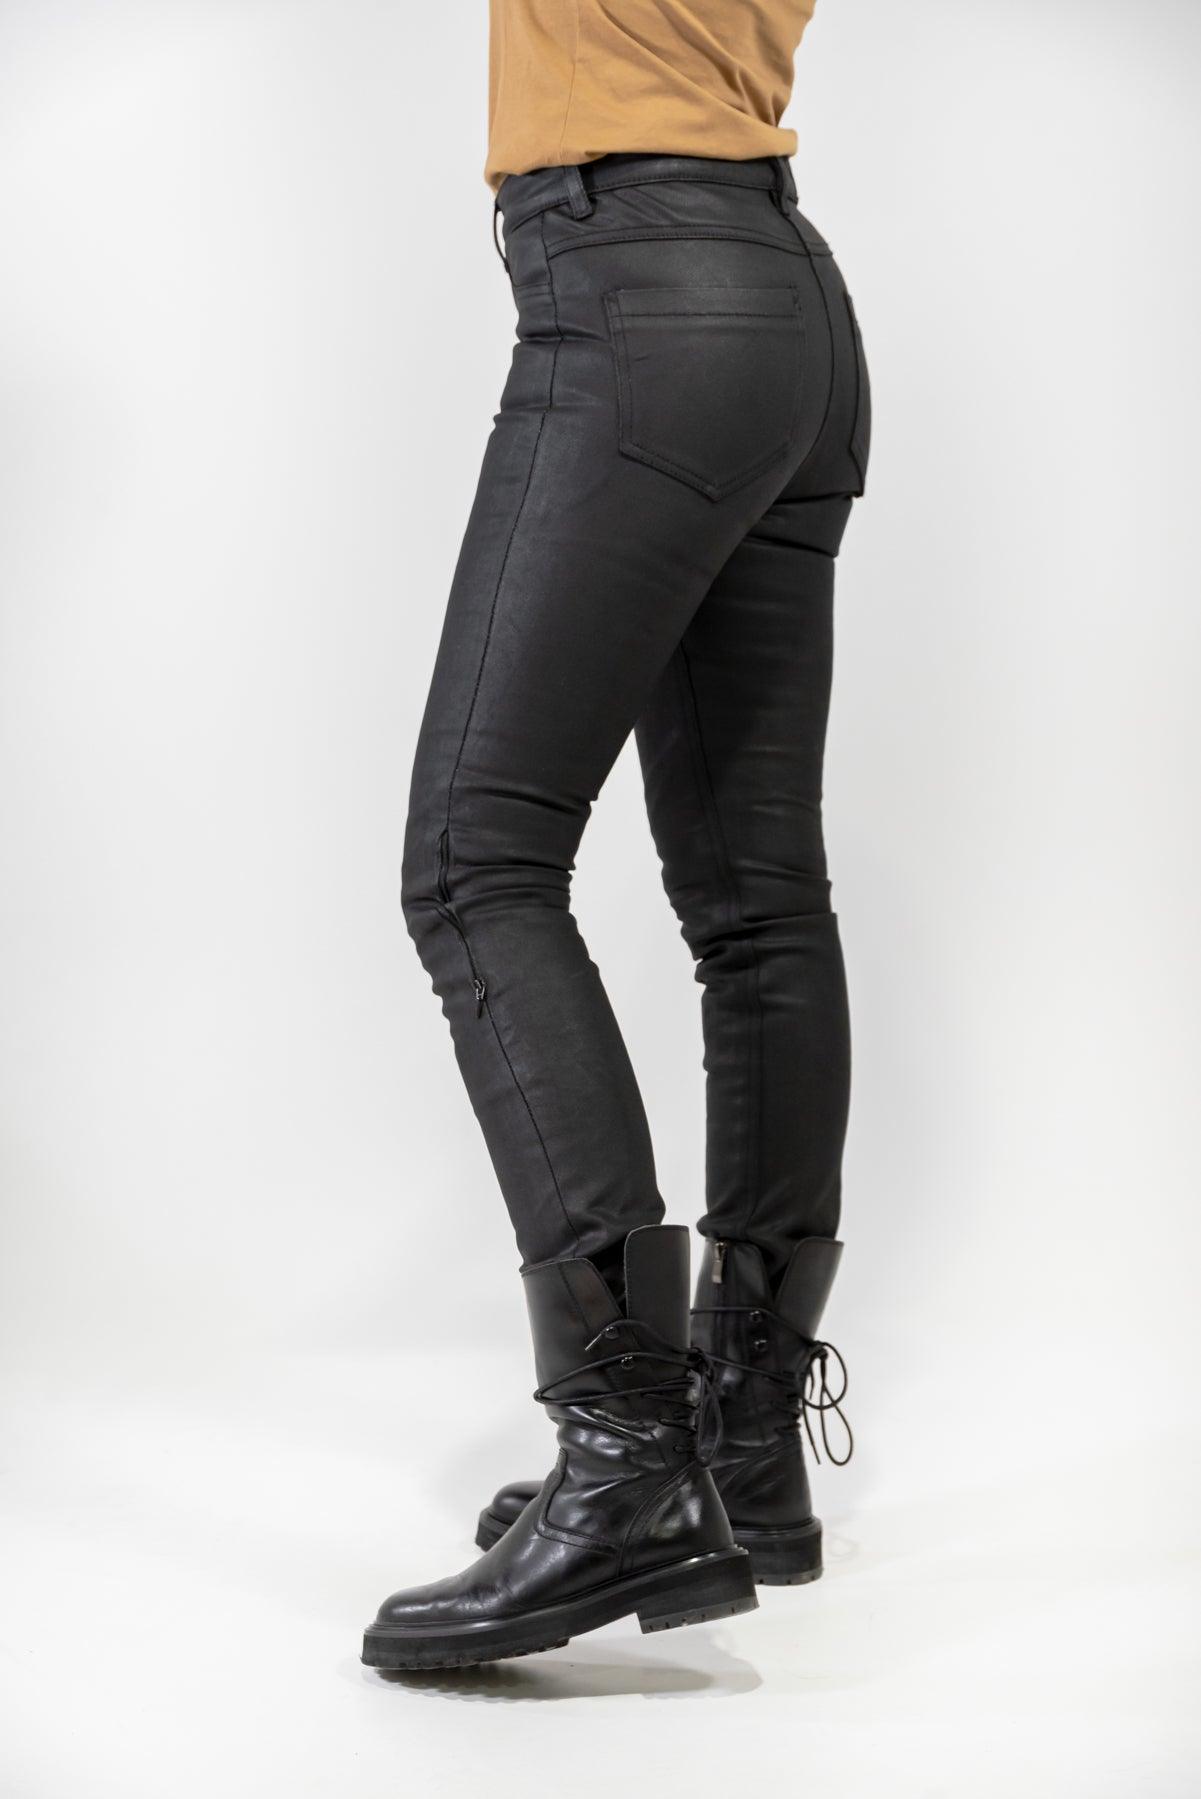 Women's Motorcycle Jeans & Pants